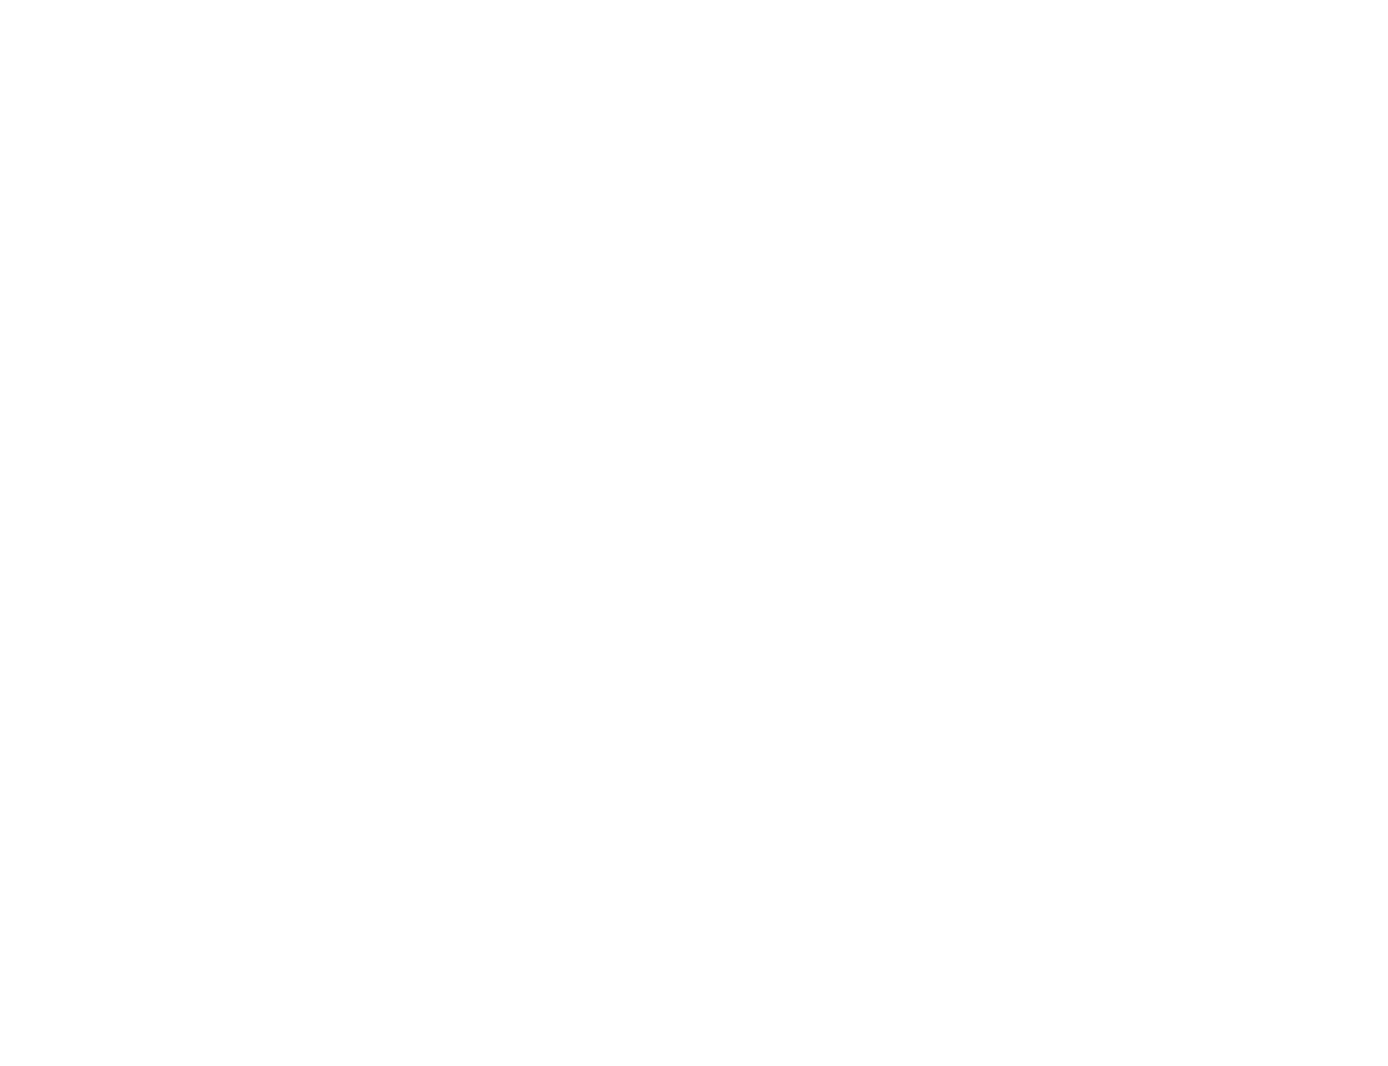 Woodsman's Pizzeria Somaud